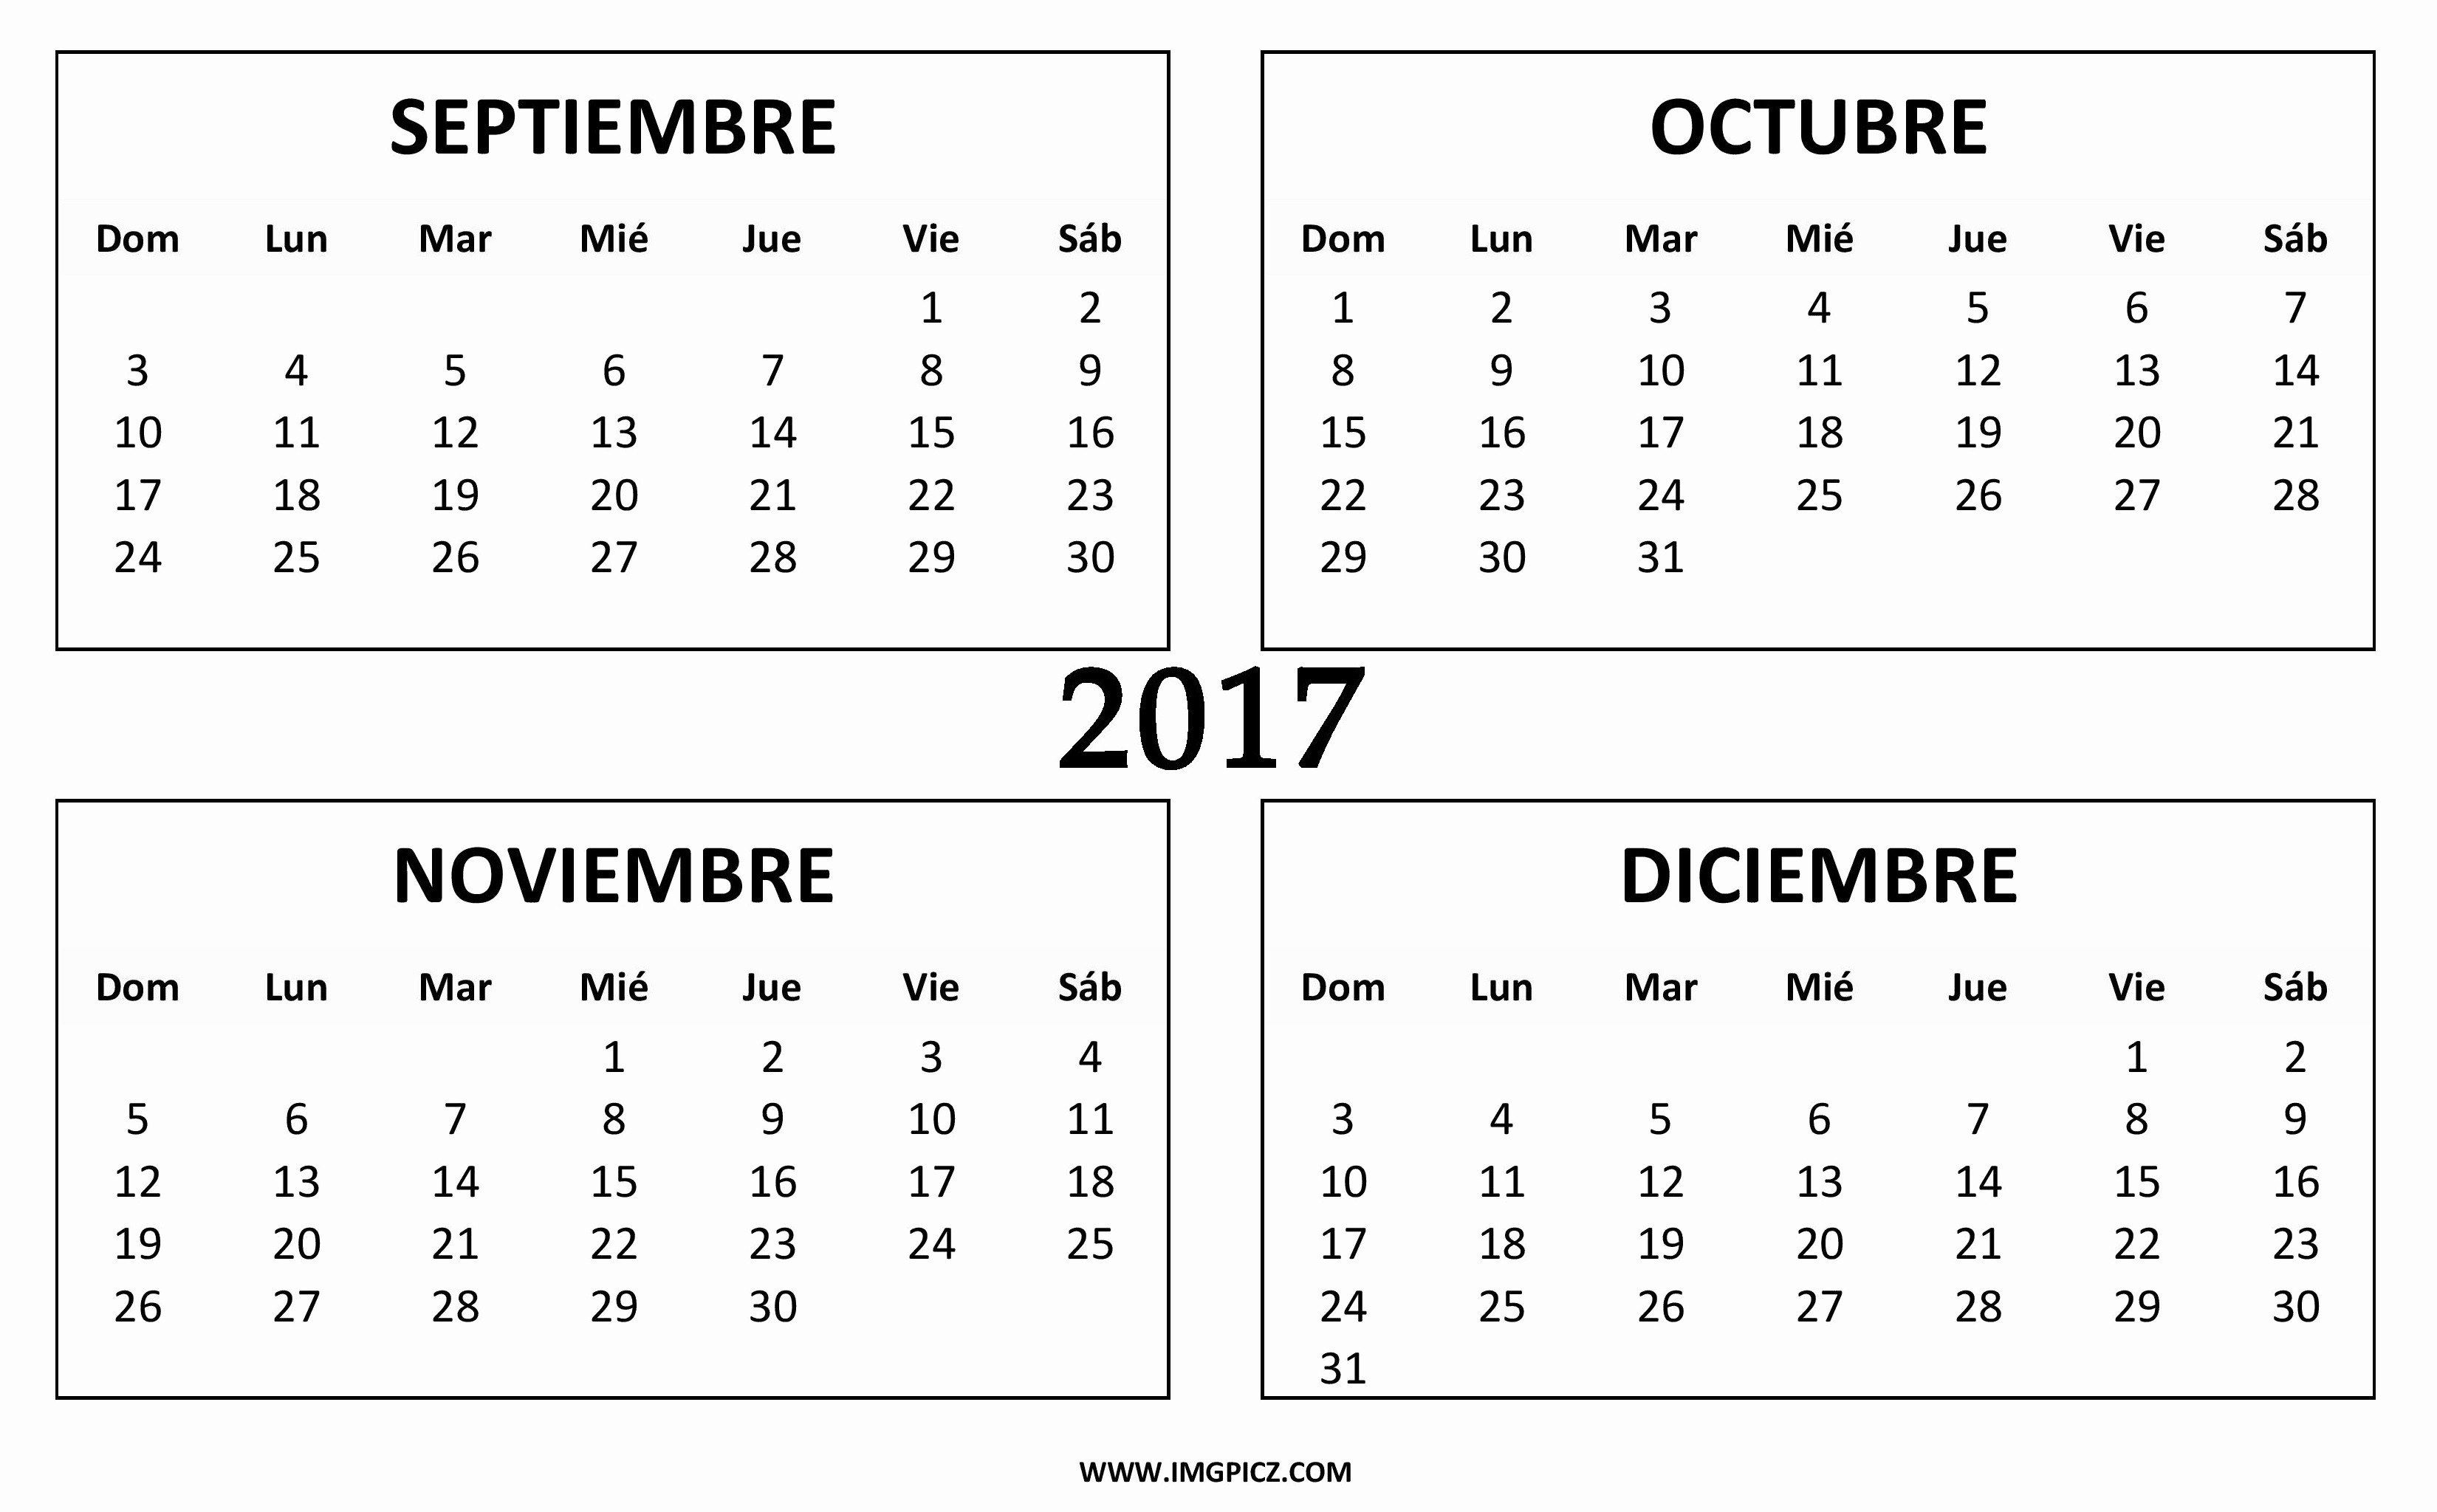 Calendario Diciembre 2017 Para Imprimir Best Of Diciembre 2017 Calendario 365 Related Keywords Diciembre